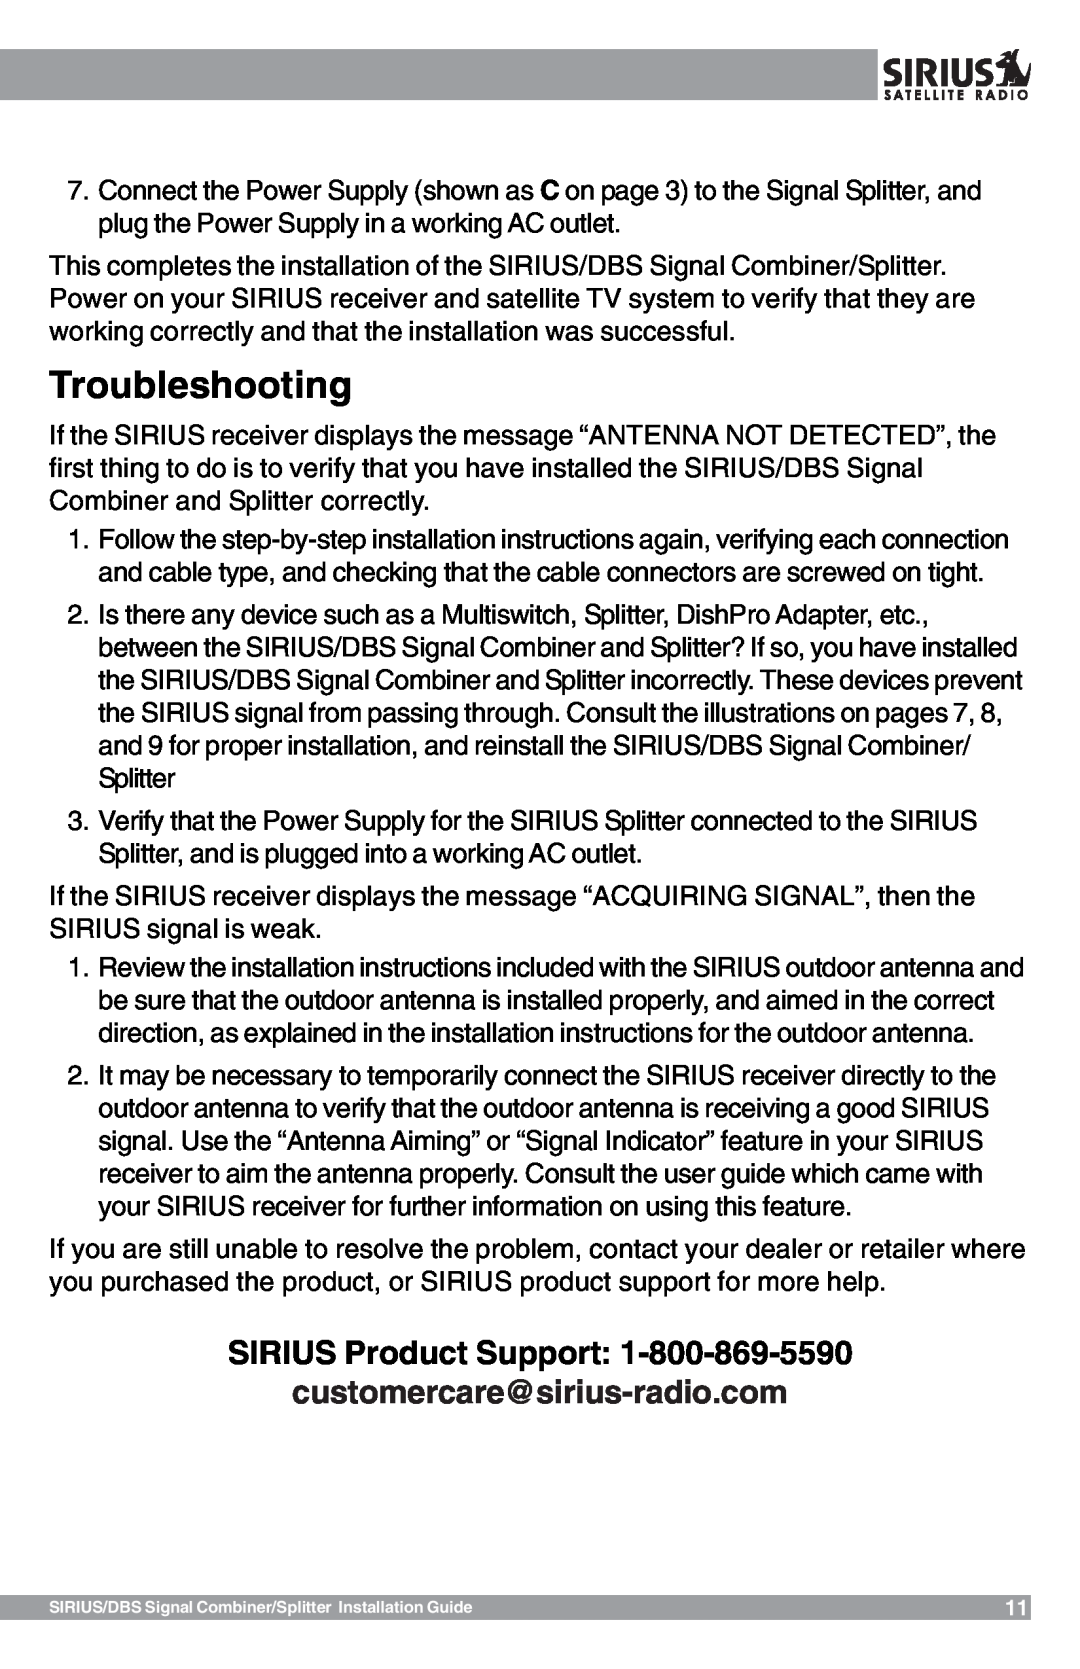 Sirius Satellite Radio SR-100C manual Troubleshooting, SIRIUS Product Support 